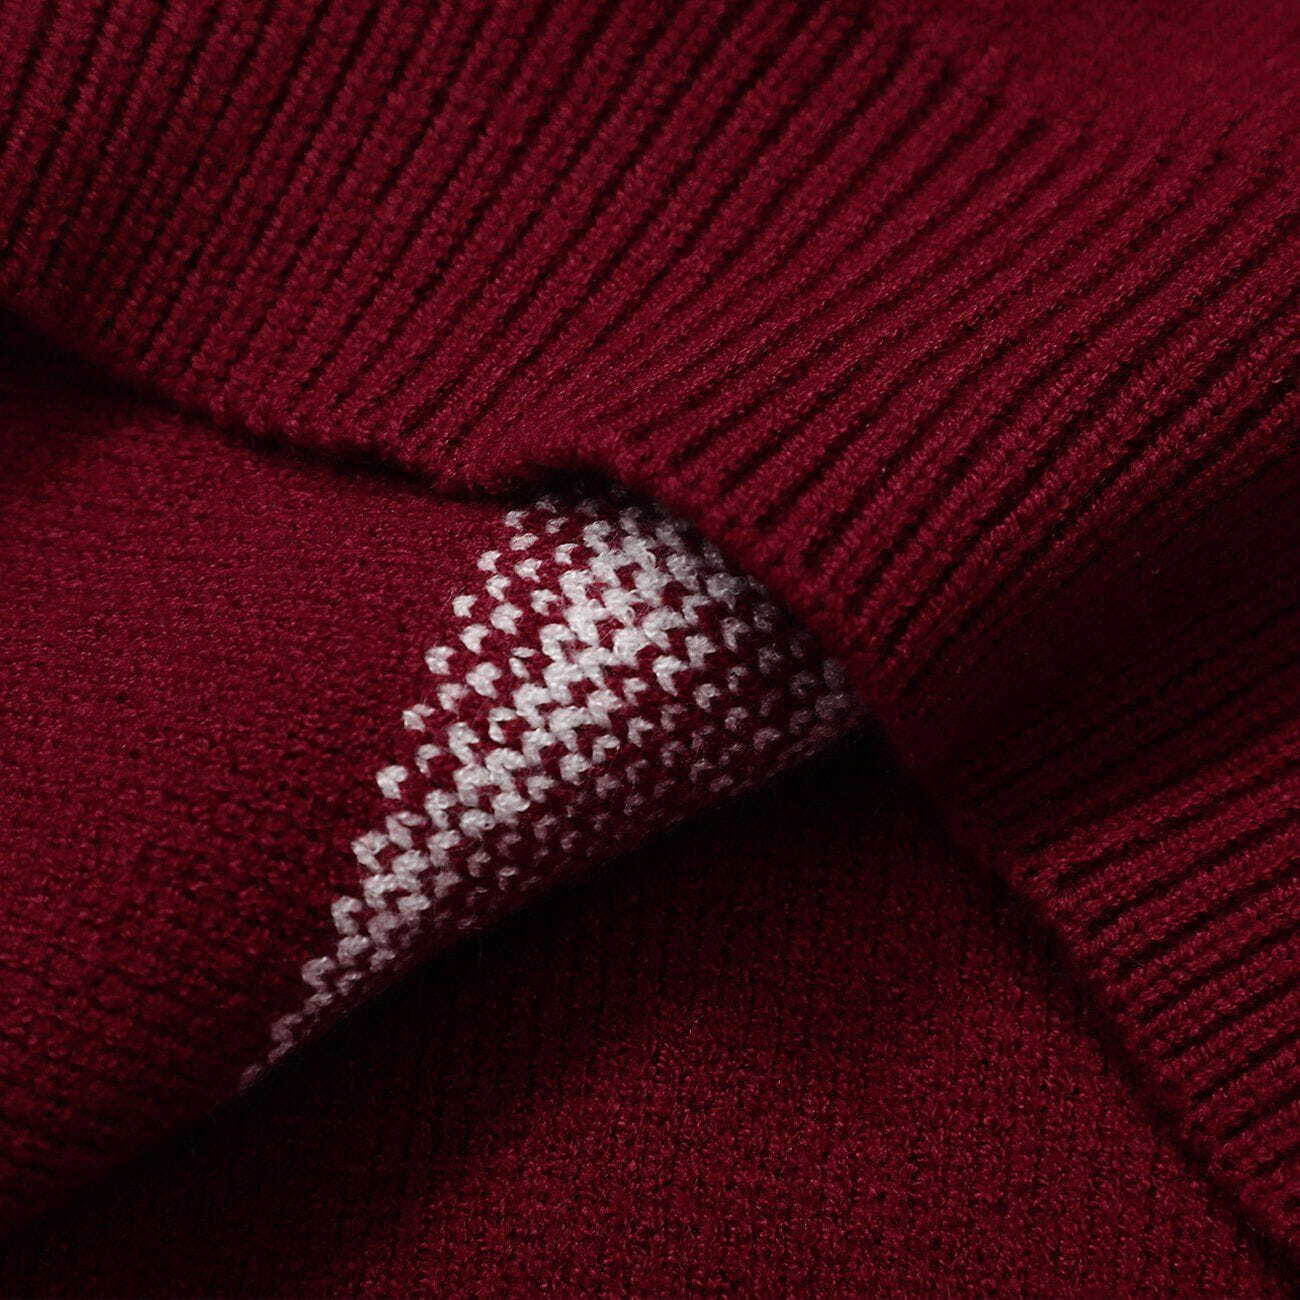 tiger print knit sweater edgy & vibrant streetwear 3866